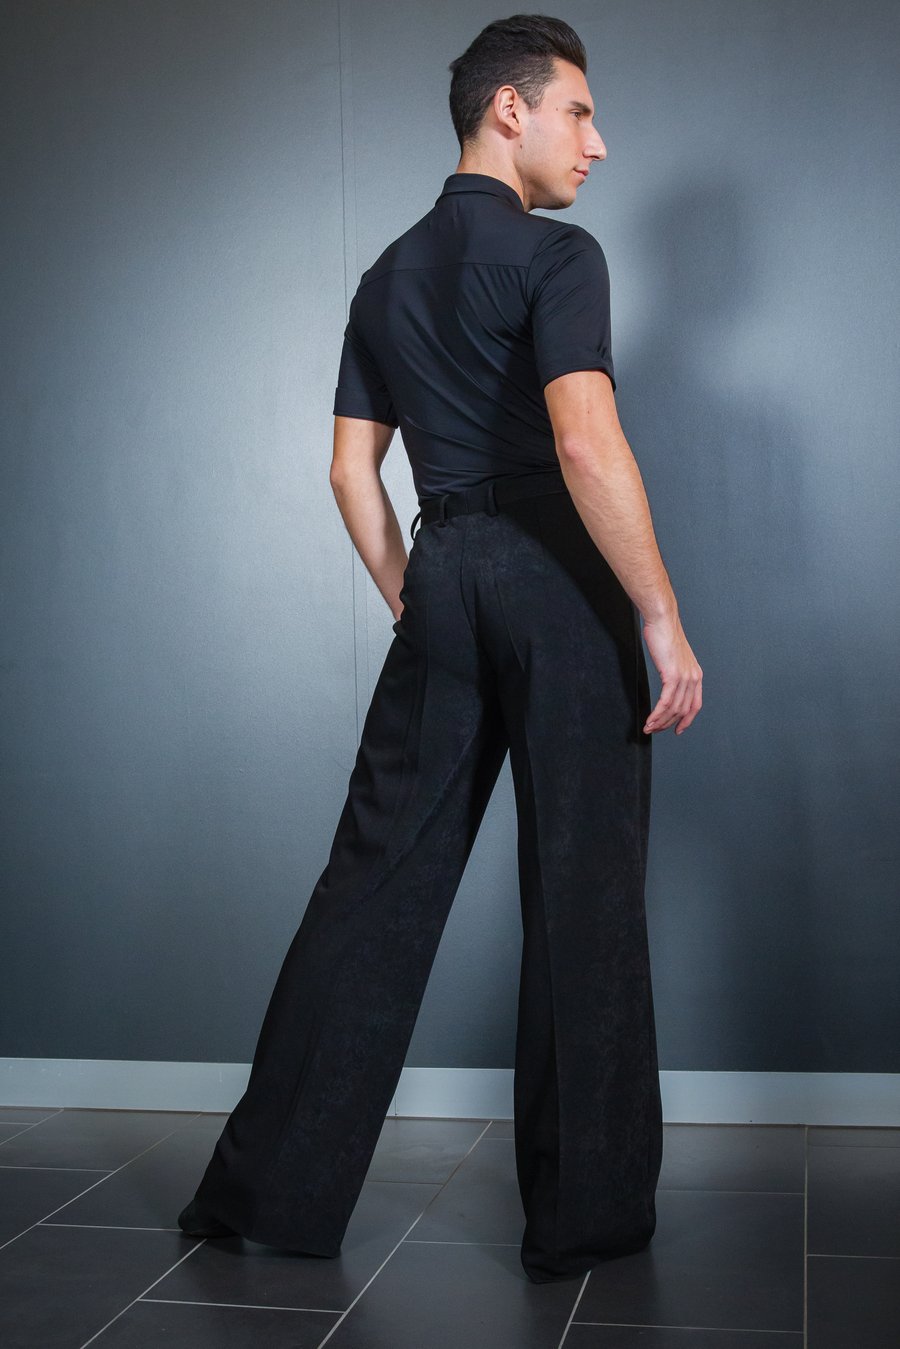 Image of B9435 Men's Tailor Dance Pants Dancewear latin ballroom